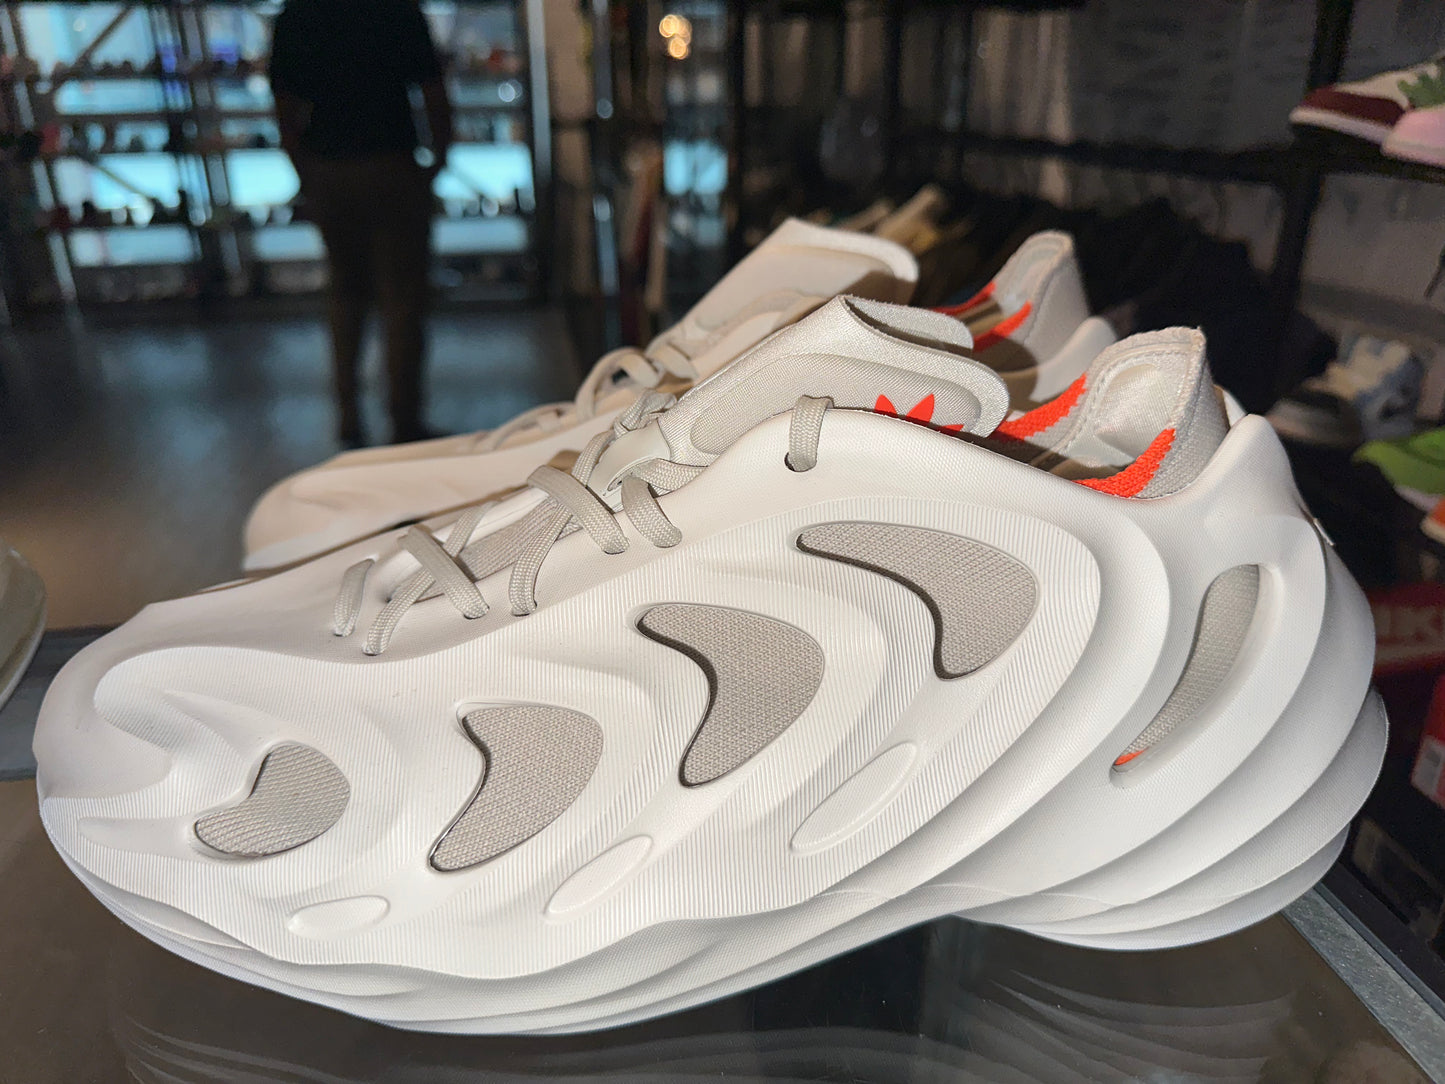 Size 11 Adidas adiFom Q “Off White” (Mall)